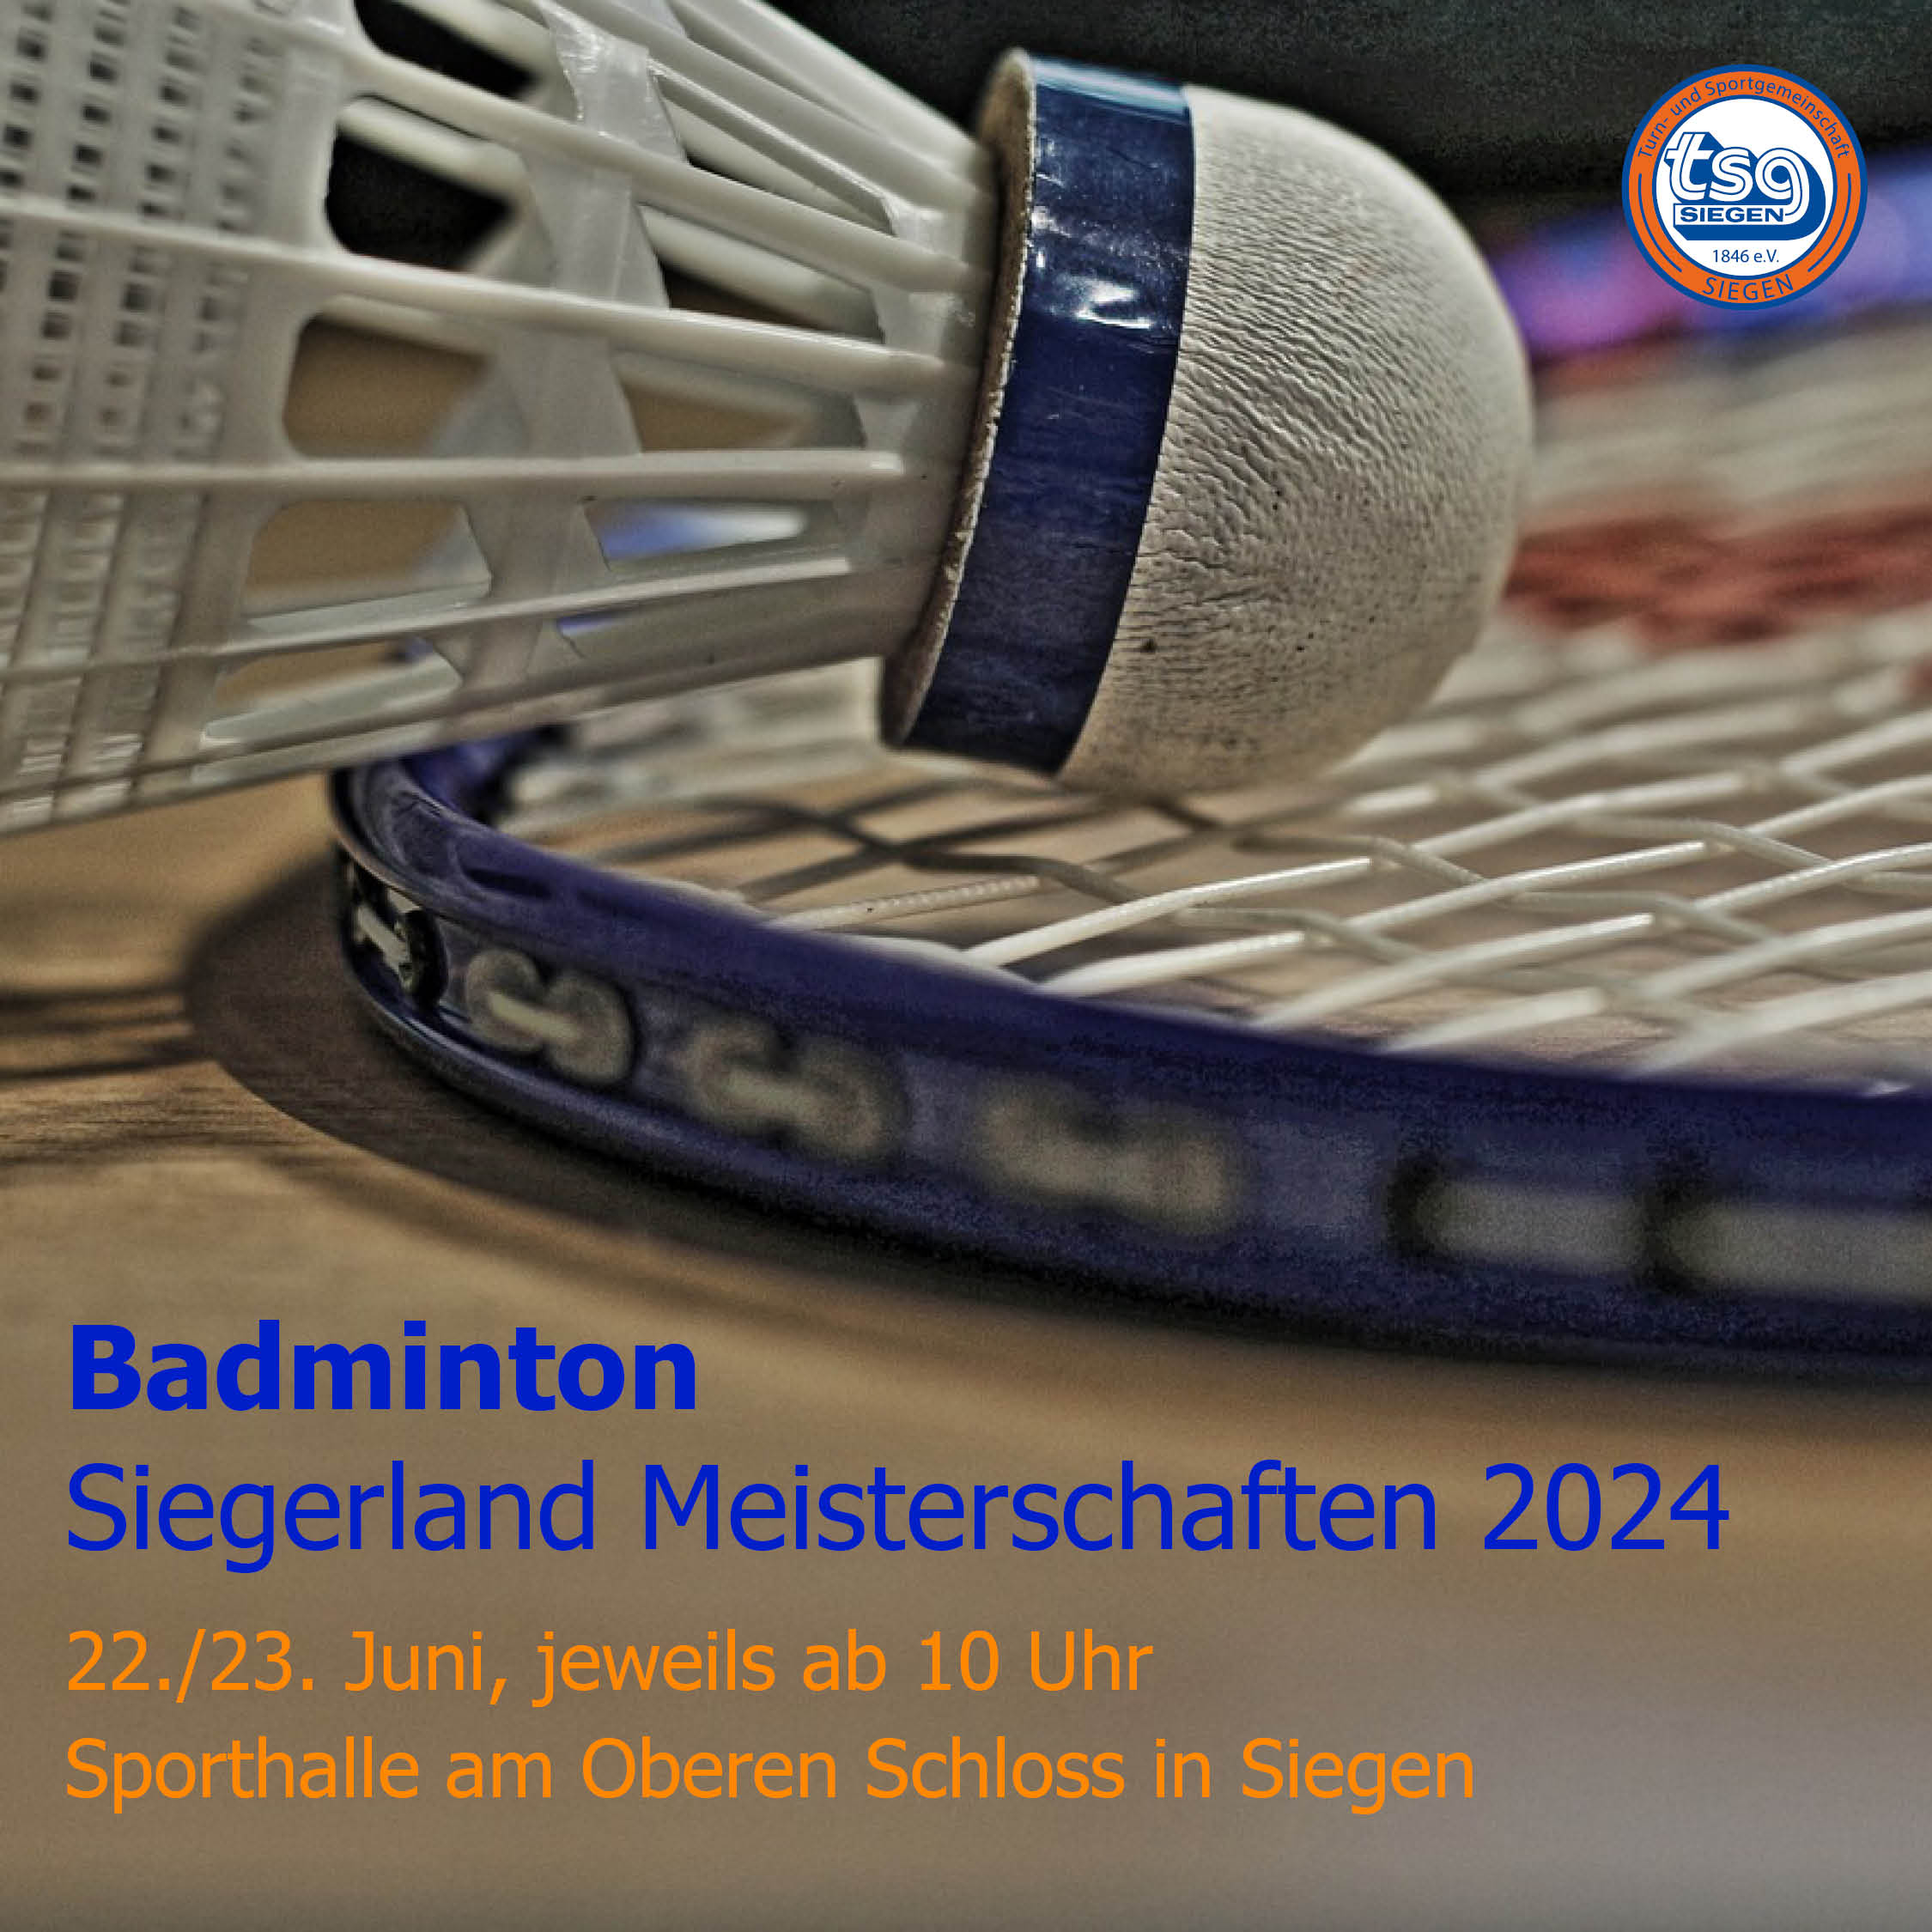 48. Badminton Siegerland Meisterschaften